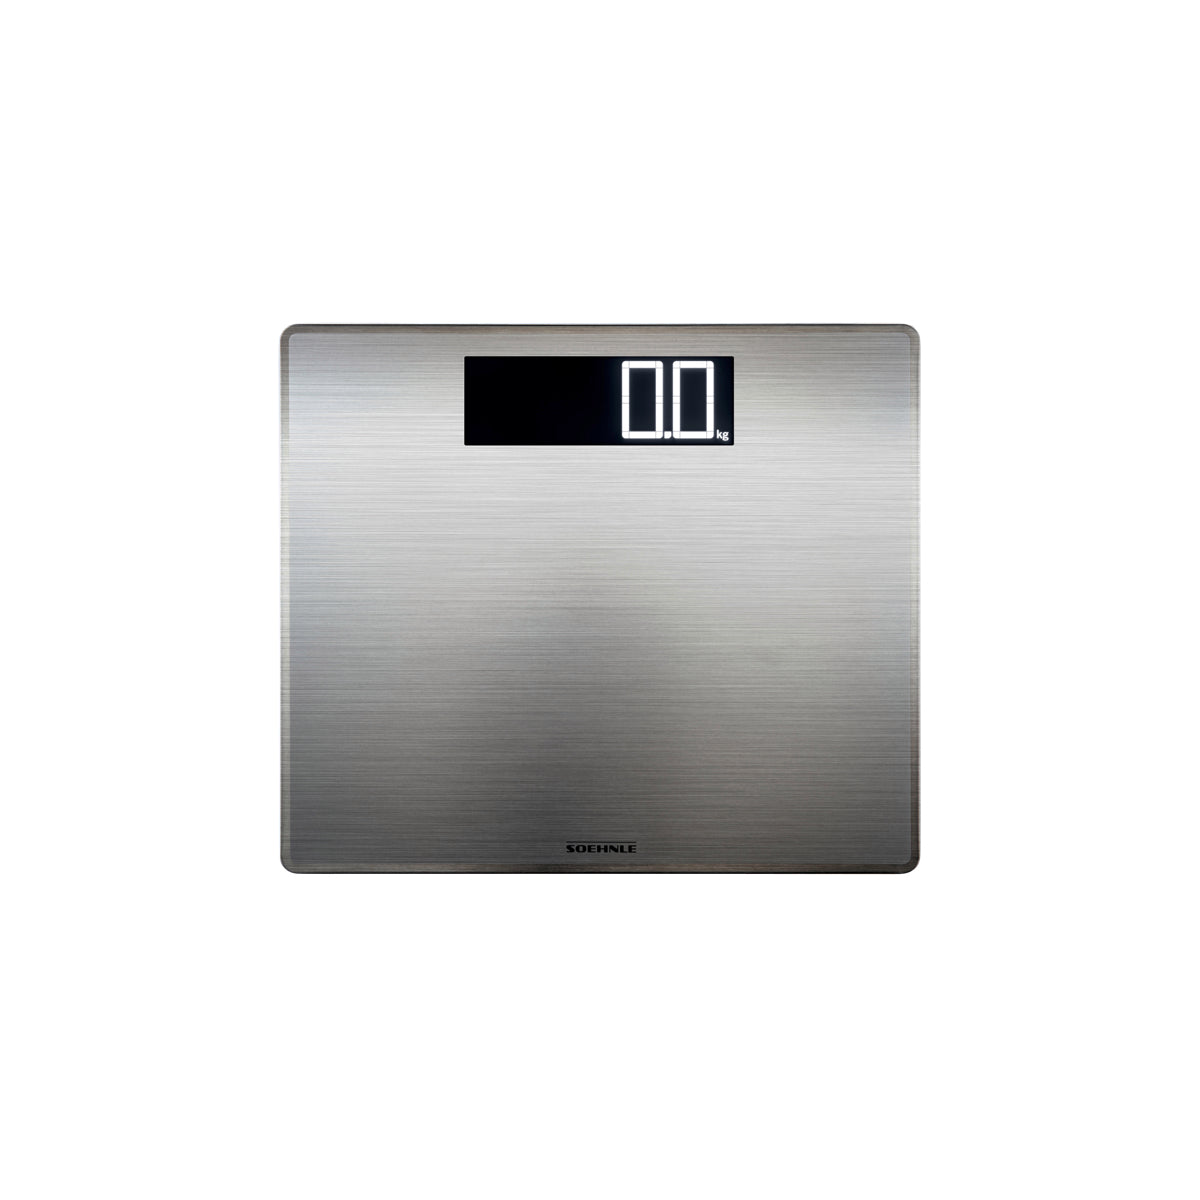 S63867 Soehnle Style Sense Safe 300 Stainless Steel Bathroom Scale 180kg Tomkin Australia Hospitality Supplies